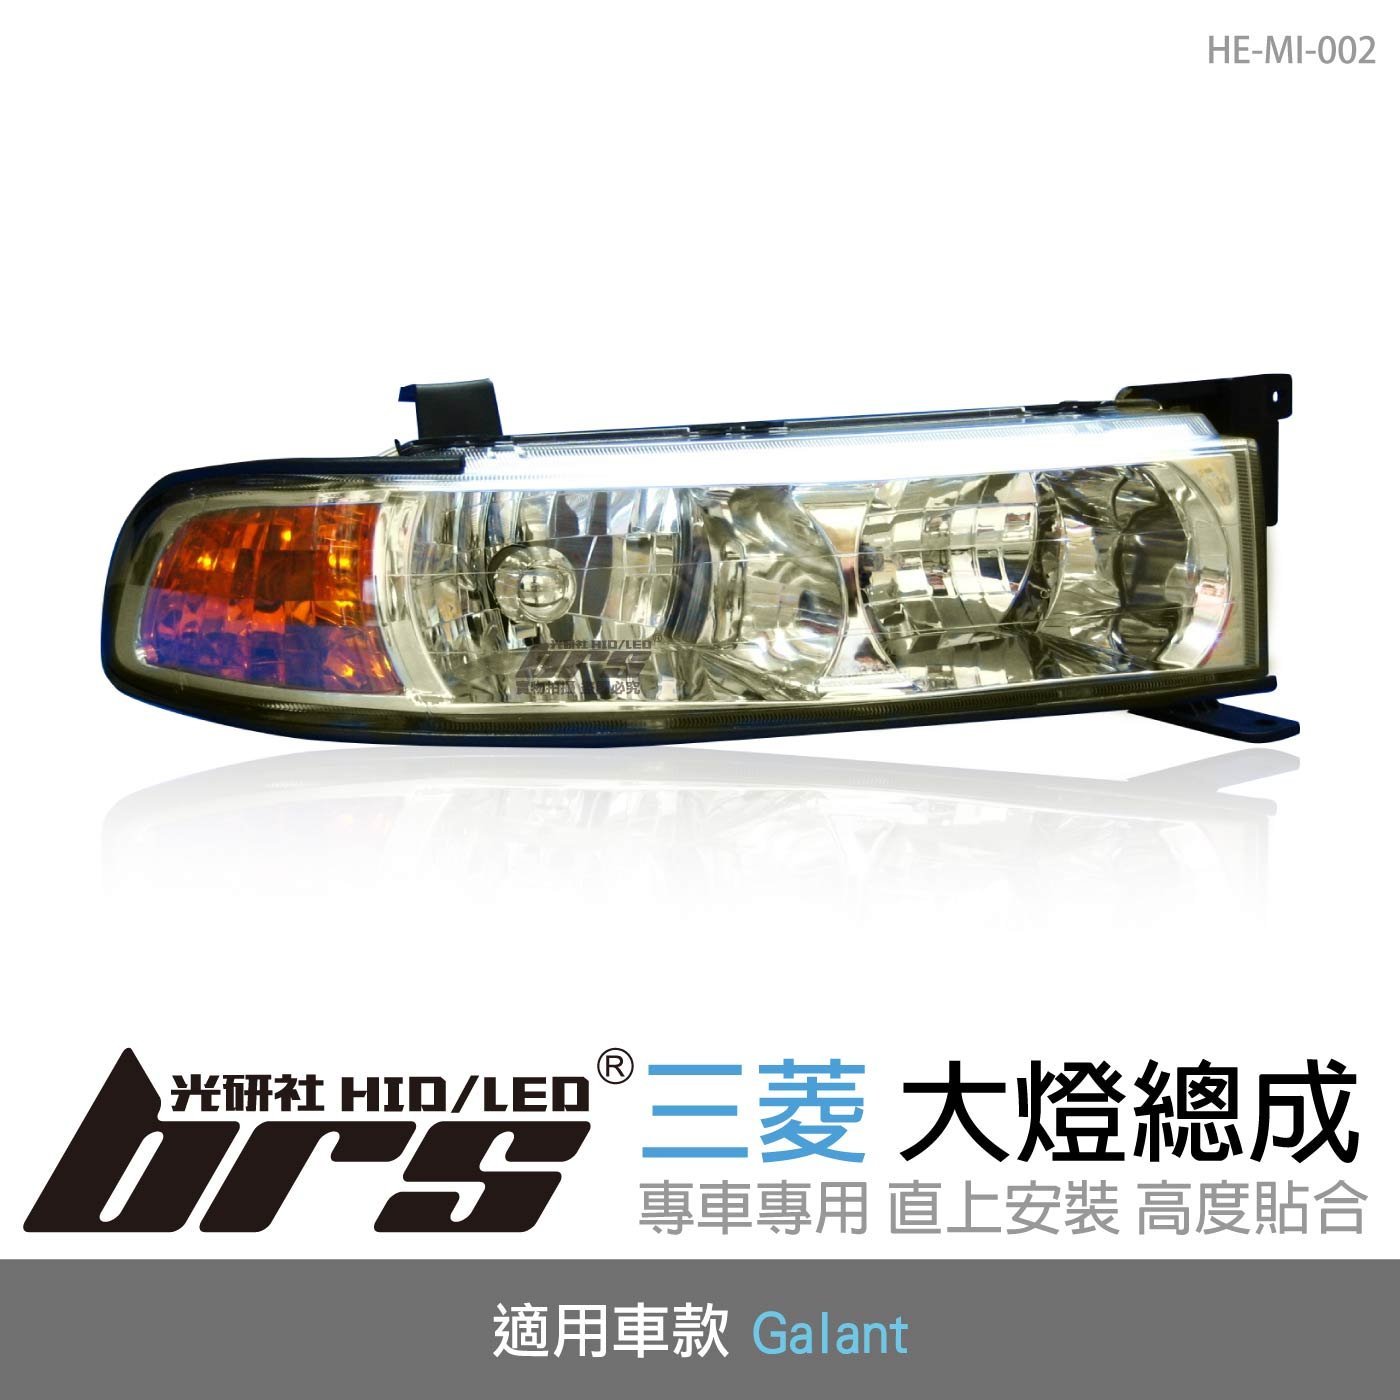 【brs光研社】HE-MI-002 Galant 大燈總成-銀底款 大燈總成 Mitsubishi 三菱 雅士俠風